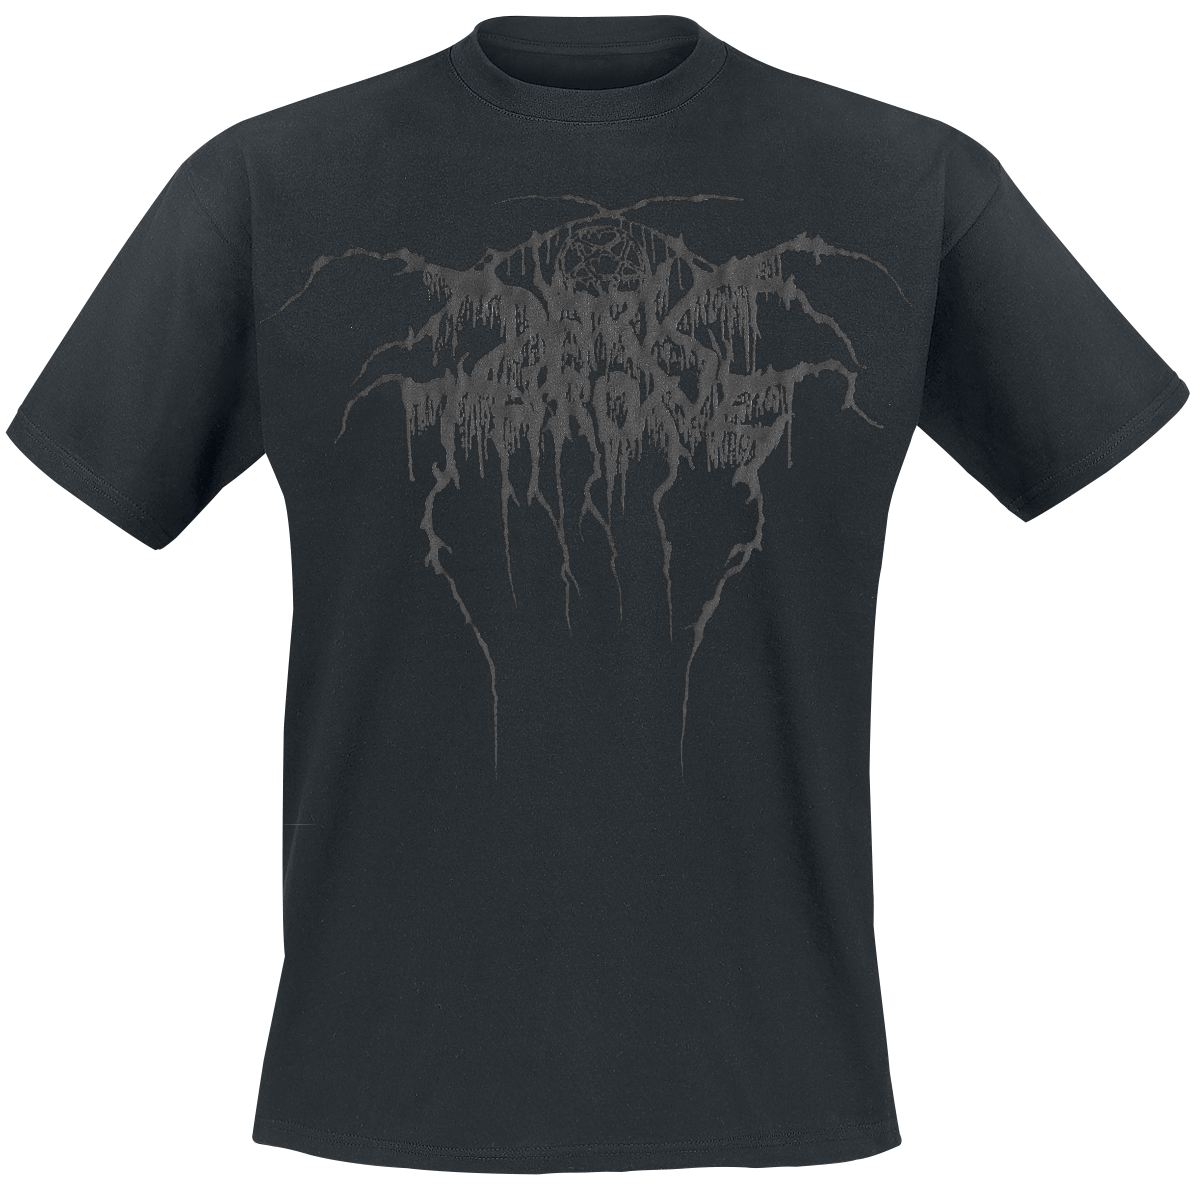 Darkthrone - True Norwegian Black Metal - T-Shirt - schwarz